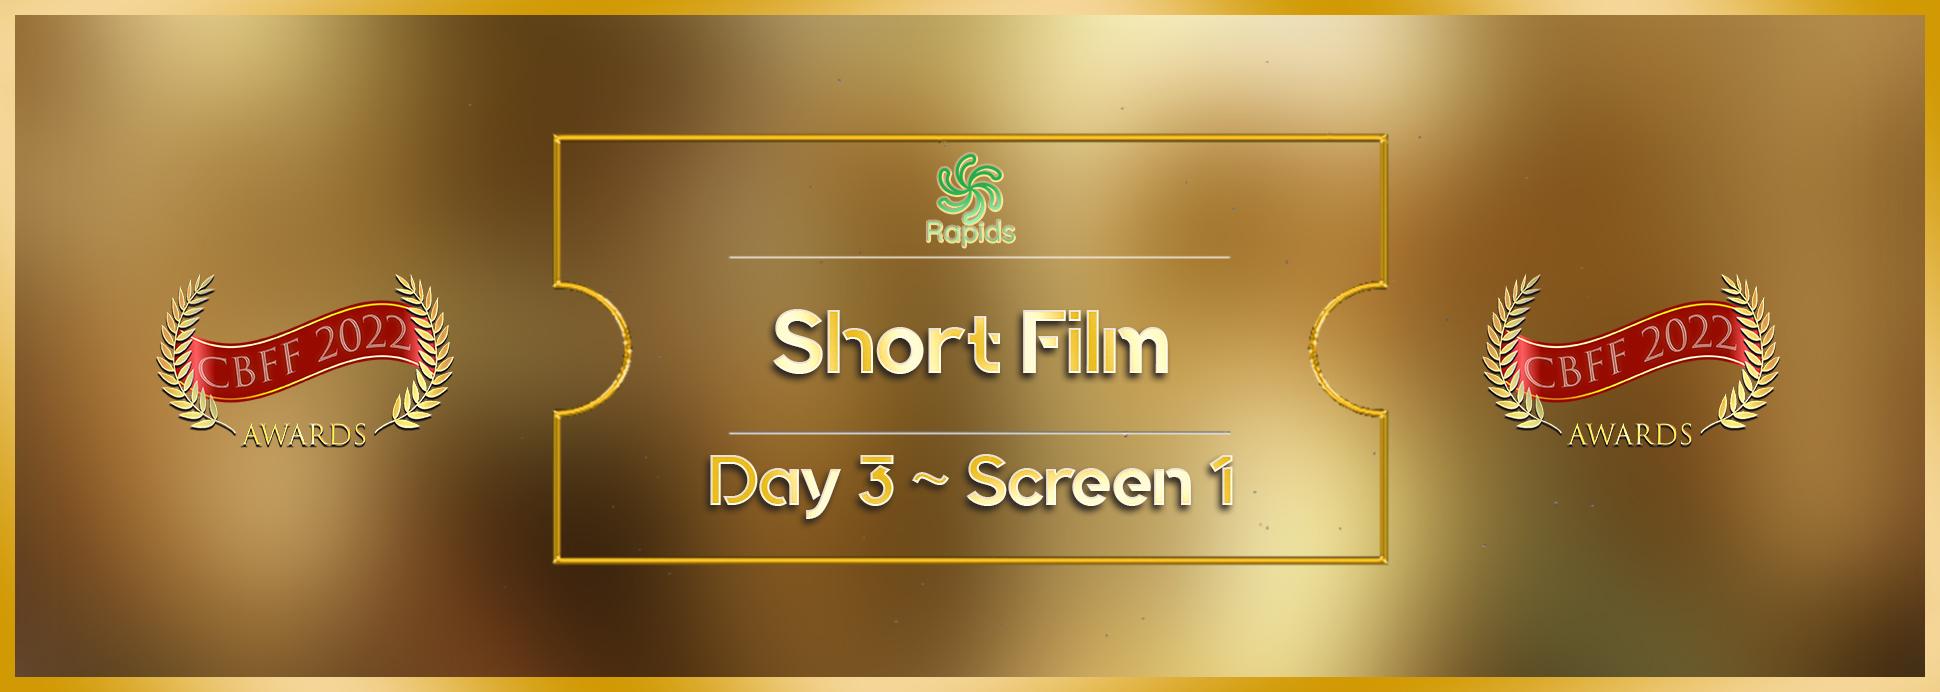 Day 3 Screen 1 Short Film 